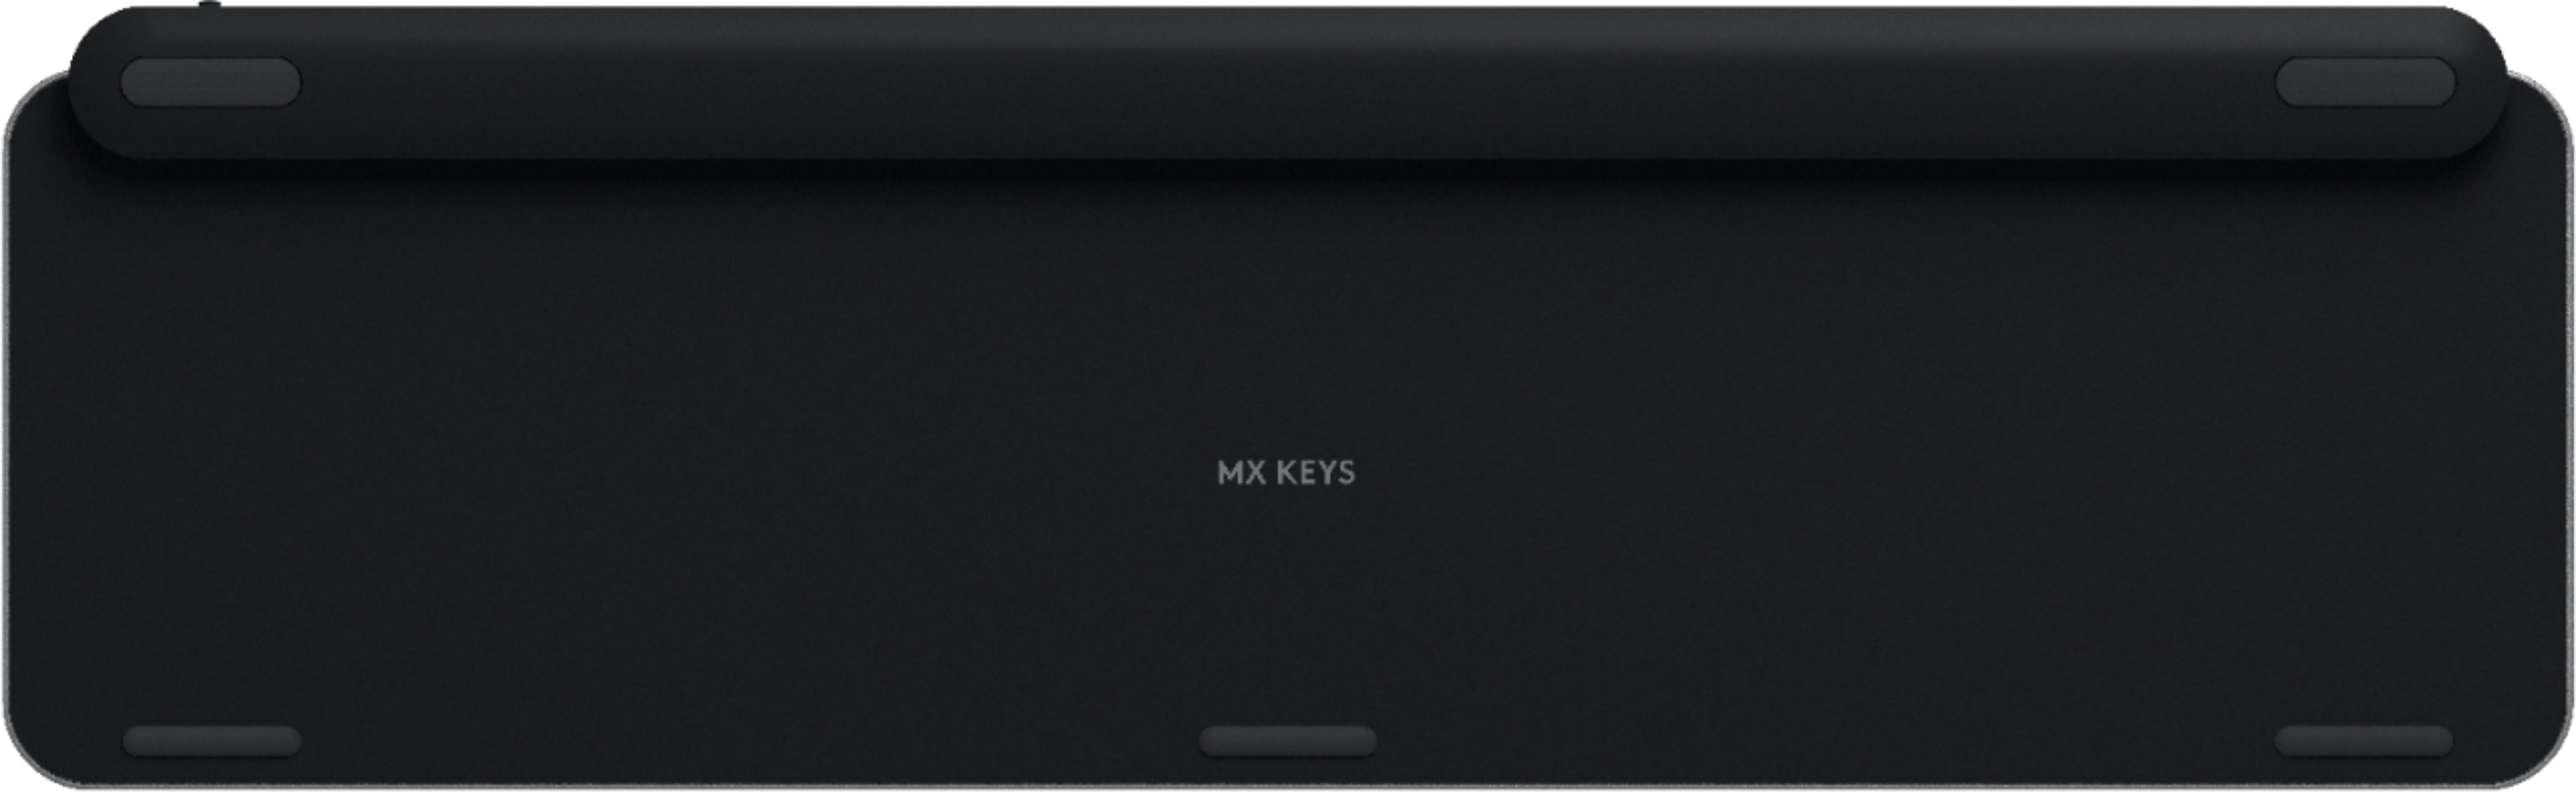 Logitech MX Keys Full-size Wireless Bluetooth Membrane Keyboard for Mac  with Smart Illumination Space Gray 920-009552 - Best Buy